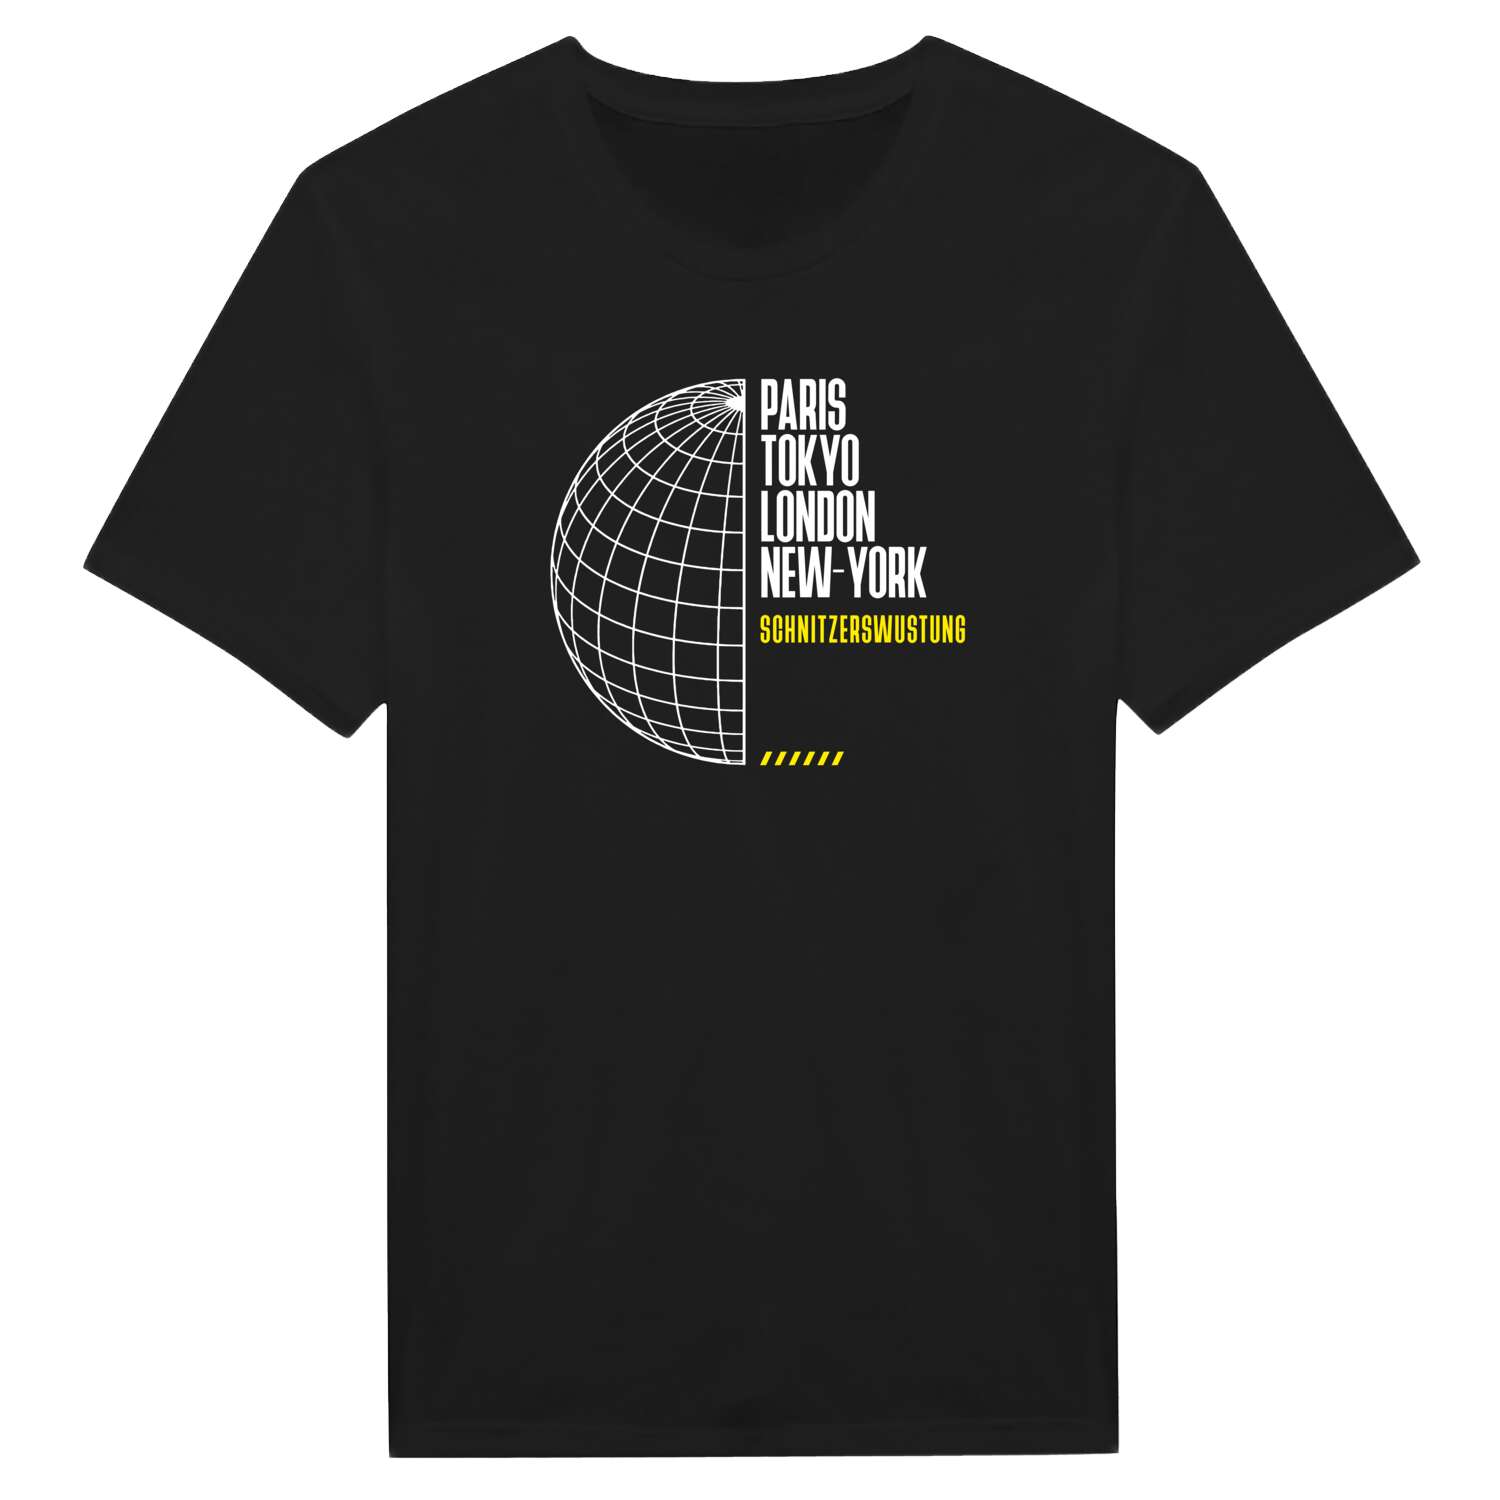 Schnitzerswustung T-Shirt »Paris Tokyo London«